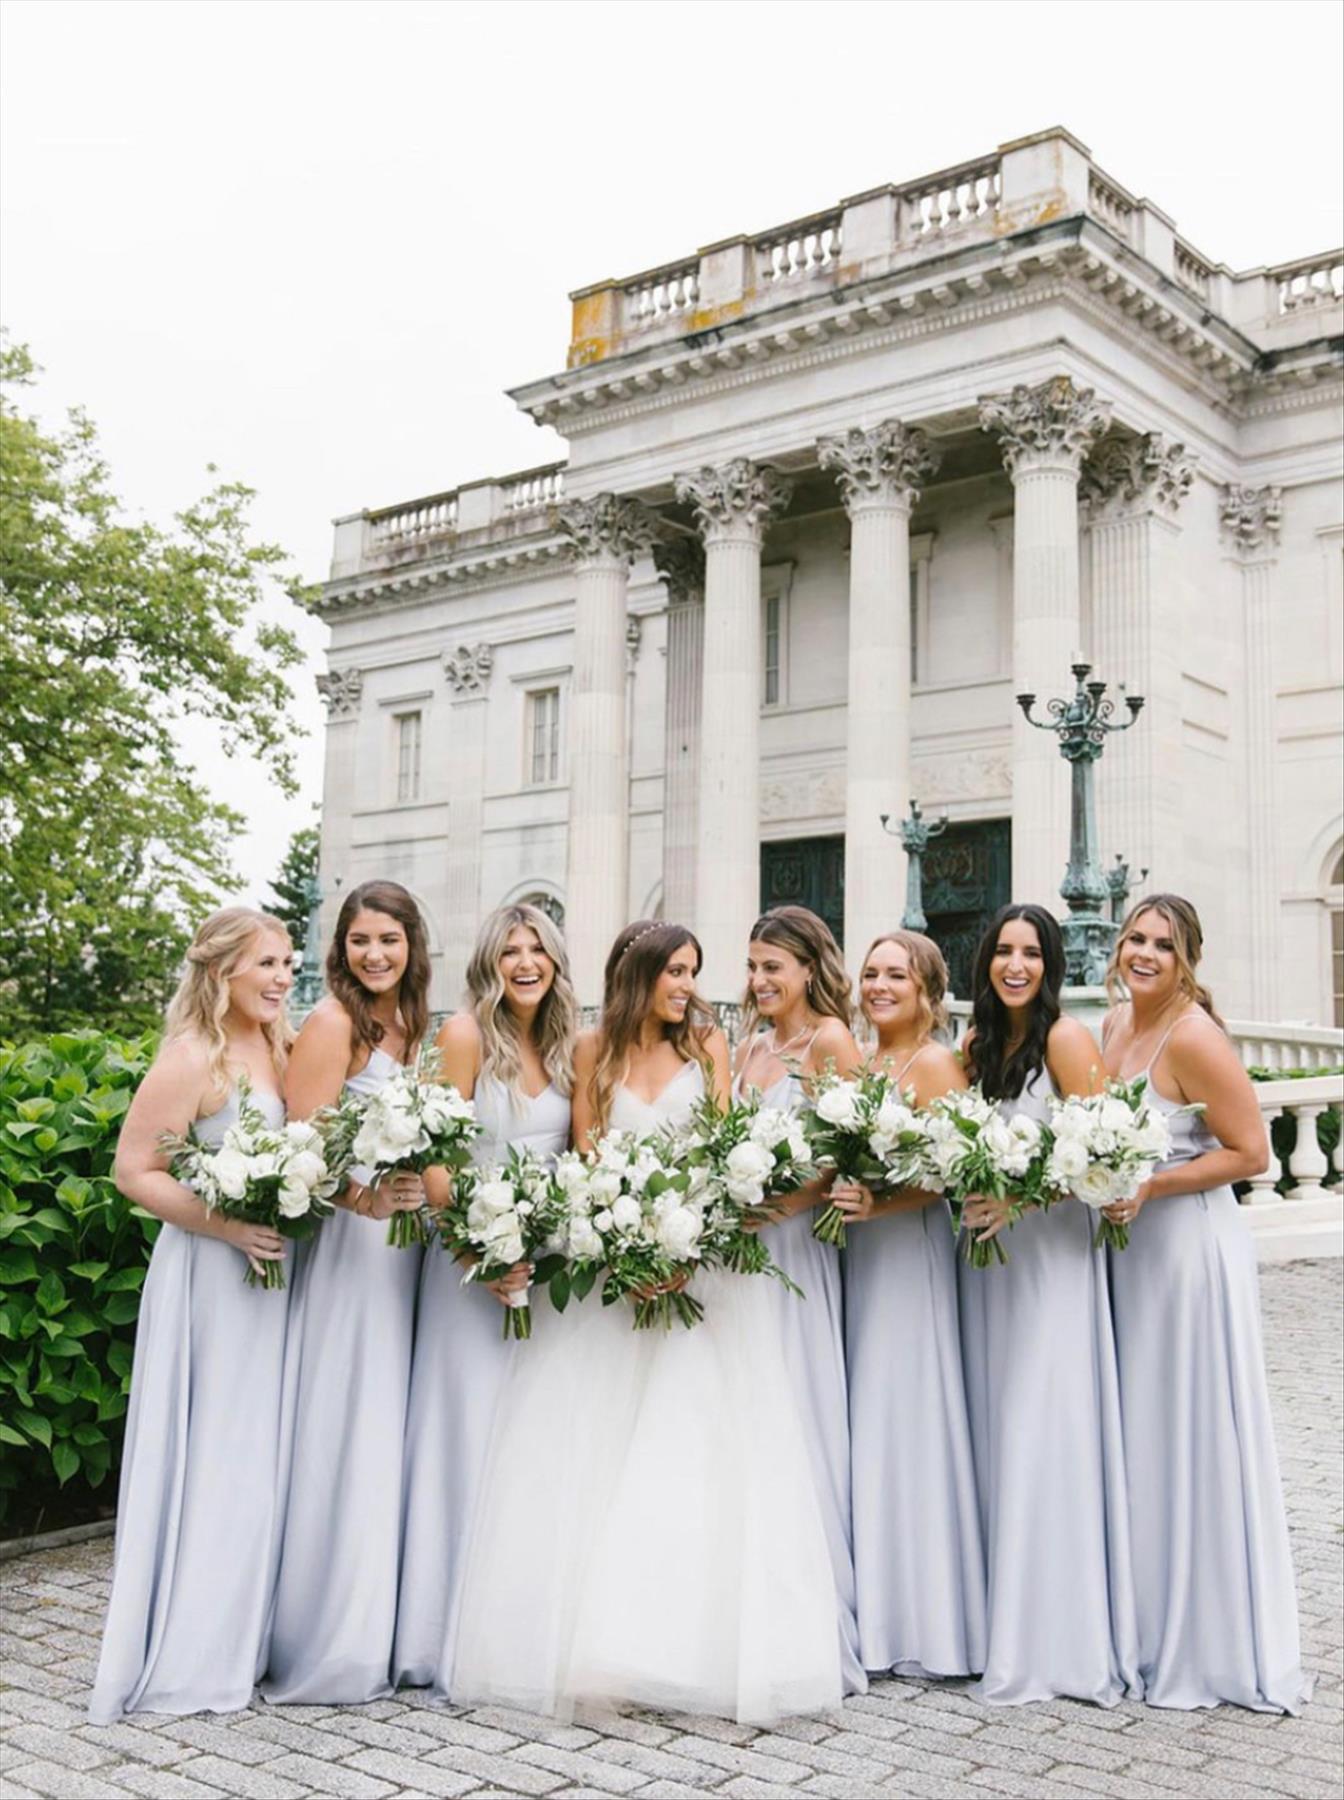 Elegant Bridesmaid Dresses From Real Weddings